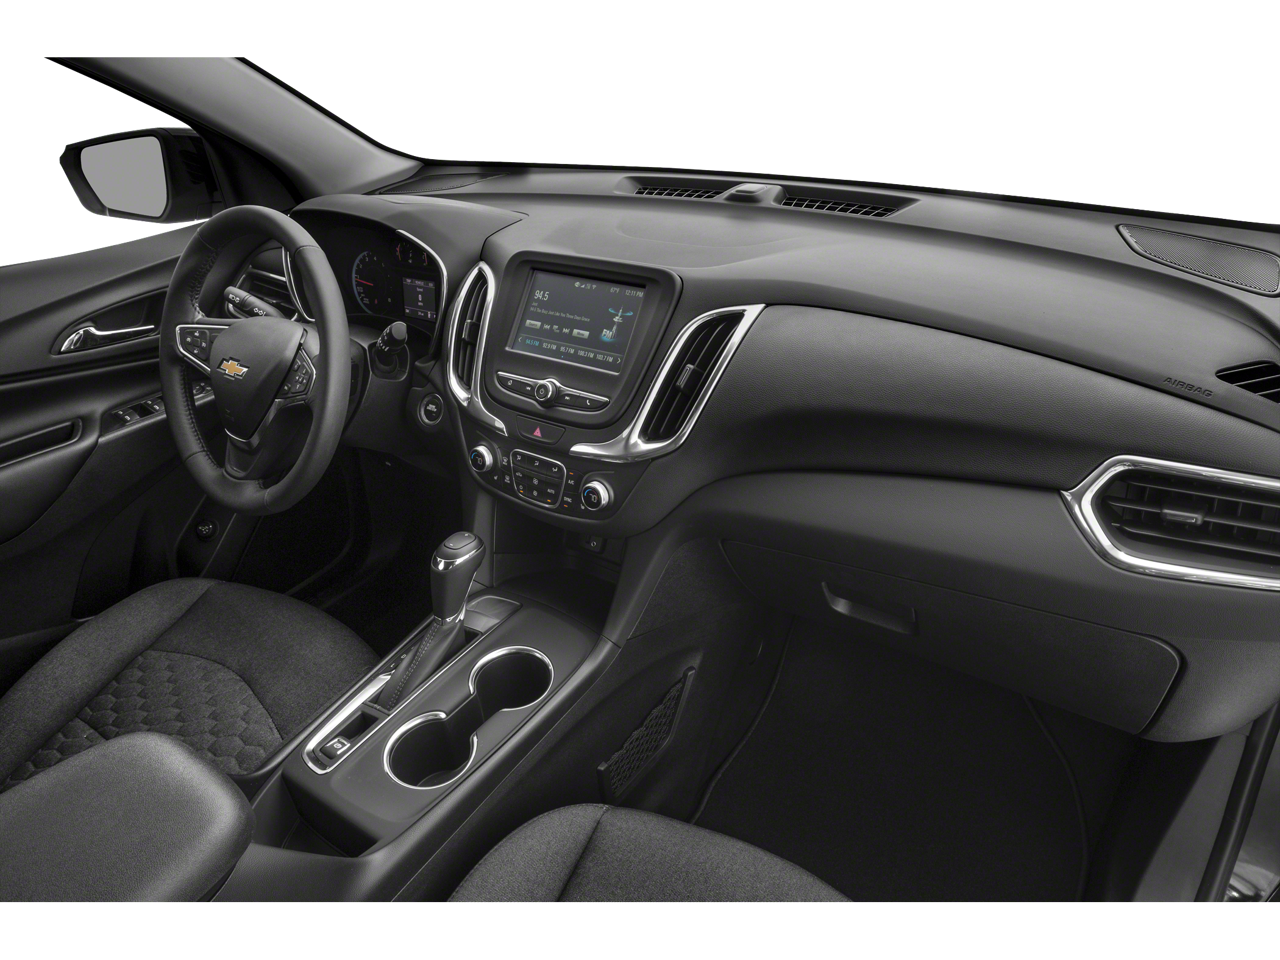 2020 Chevrolet Equinox LT 1LT w/ Confidence & Convenience